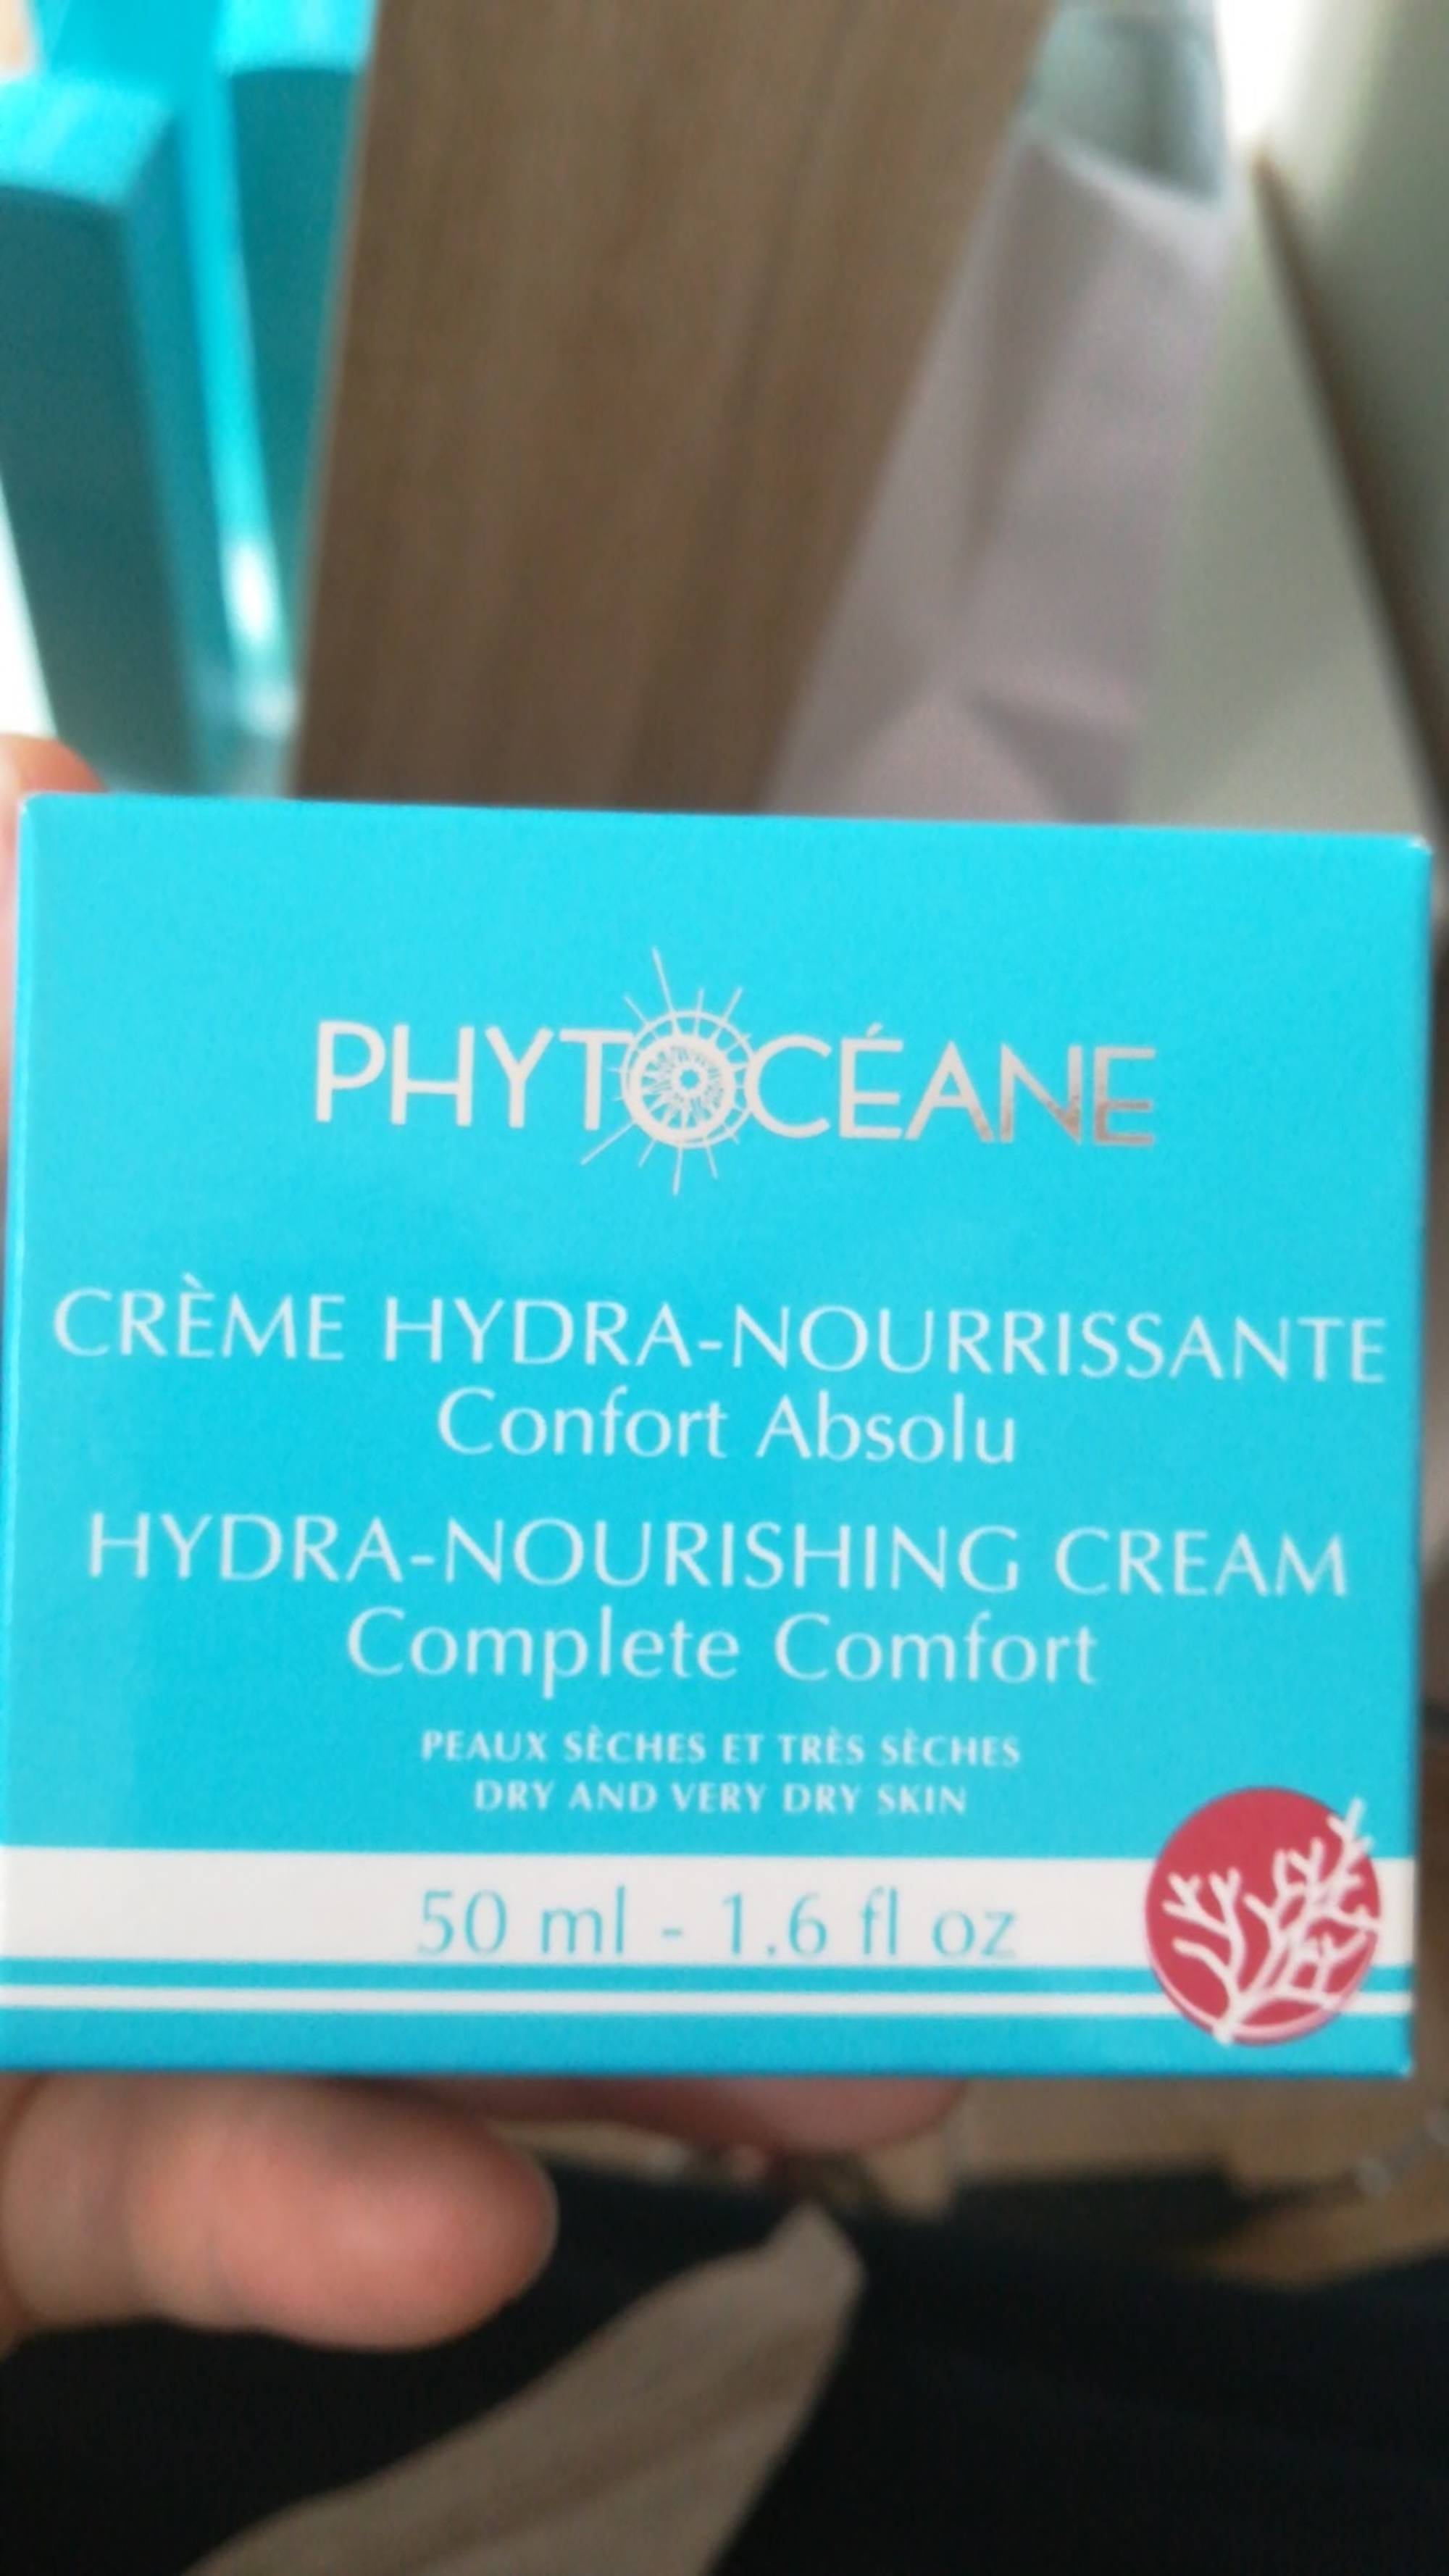 PHYTOCÉANE - Crème hydra-nourrissante confort absolu